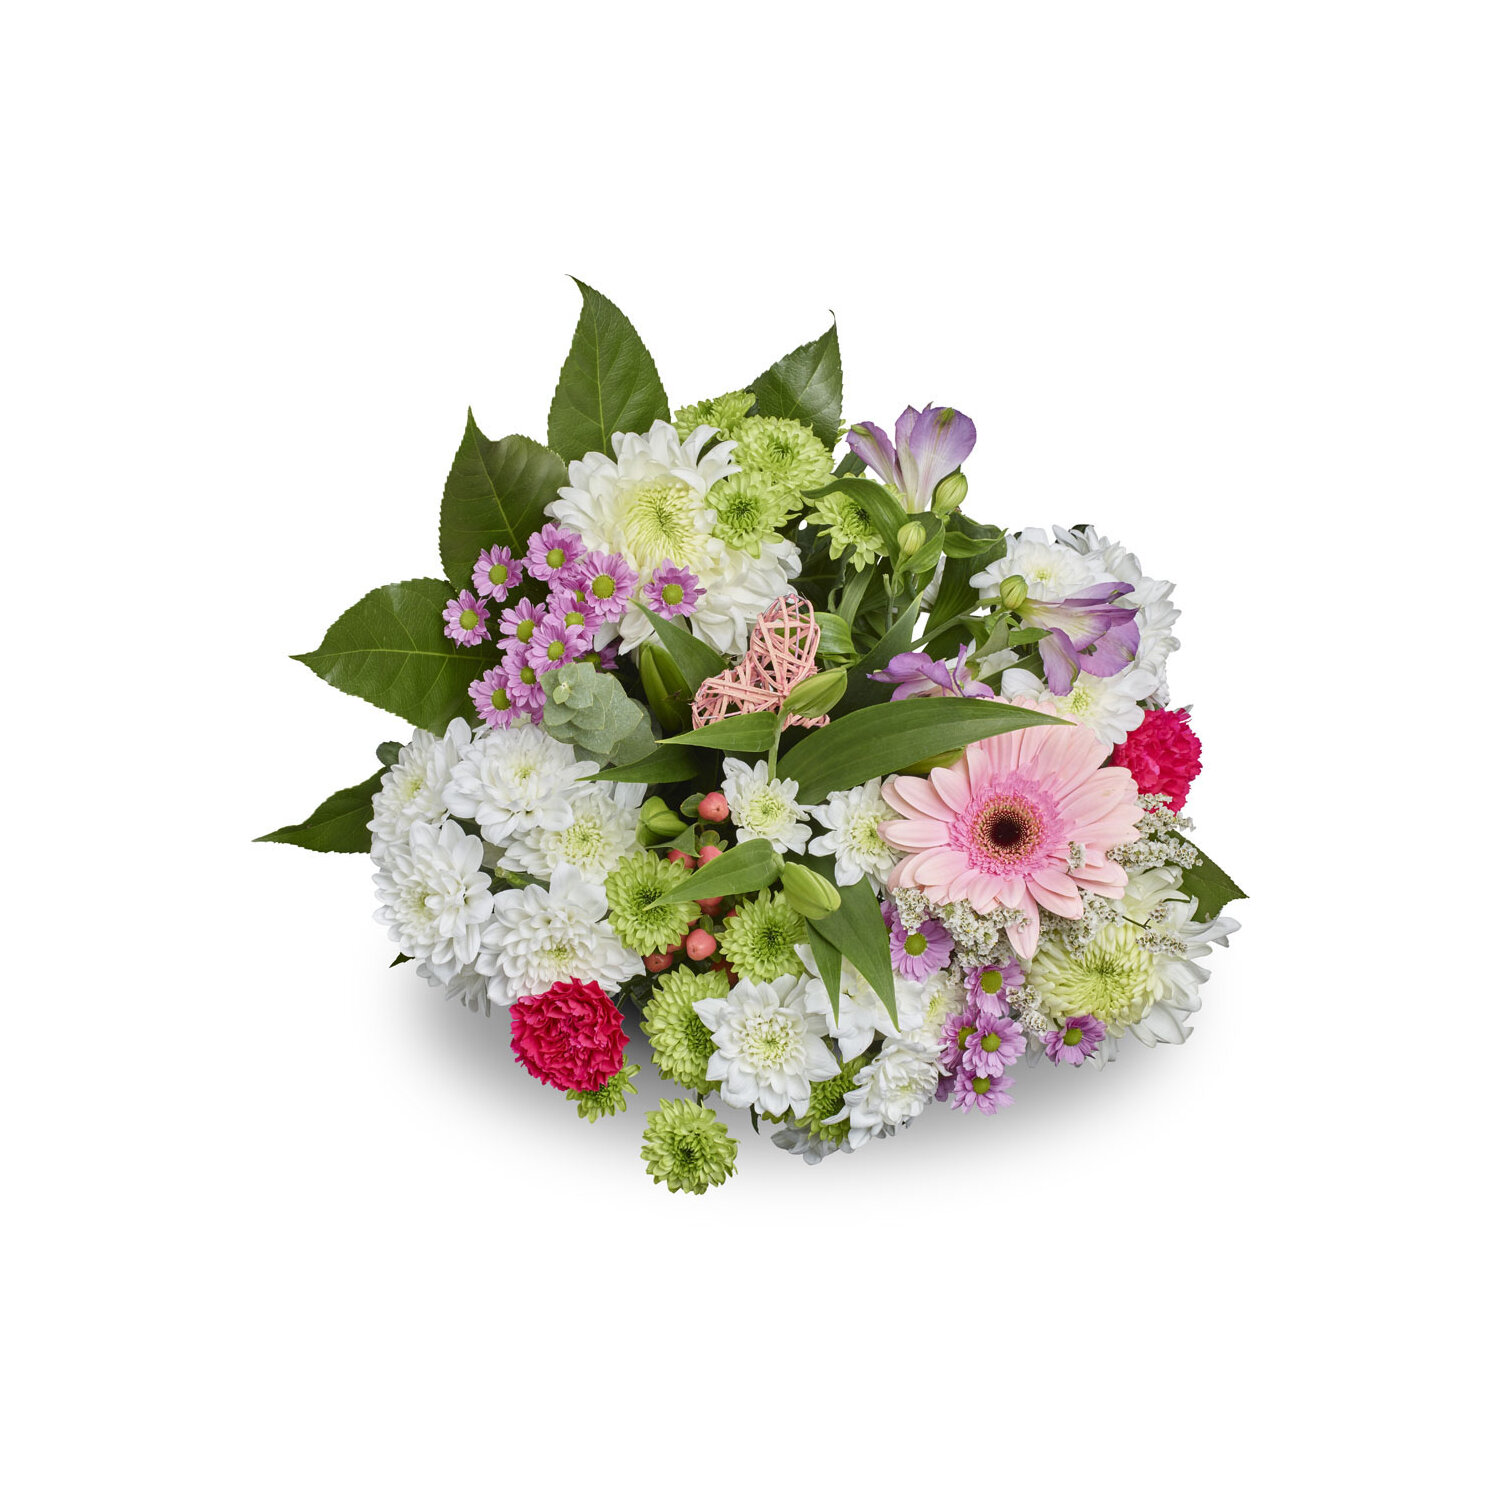 Garden Flowers - Seasonal Bouquet - Save-On-Foods